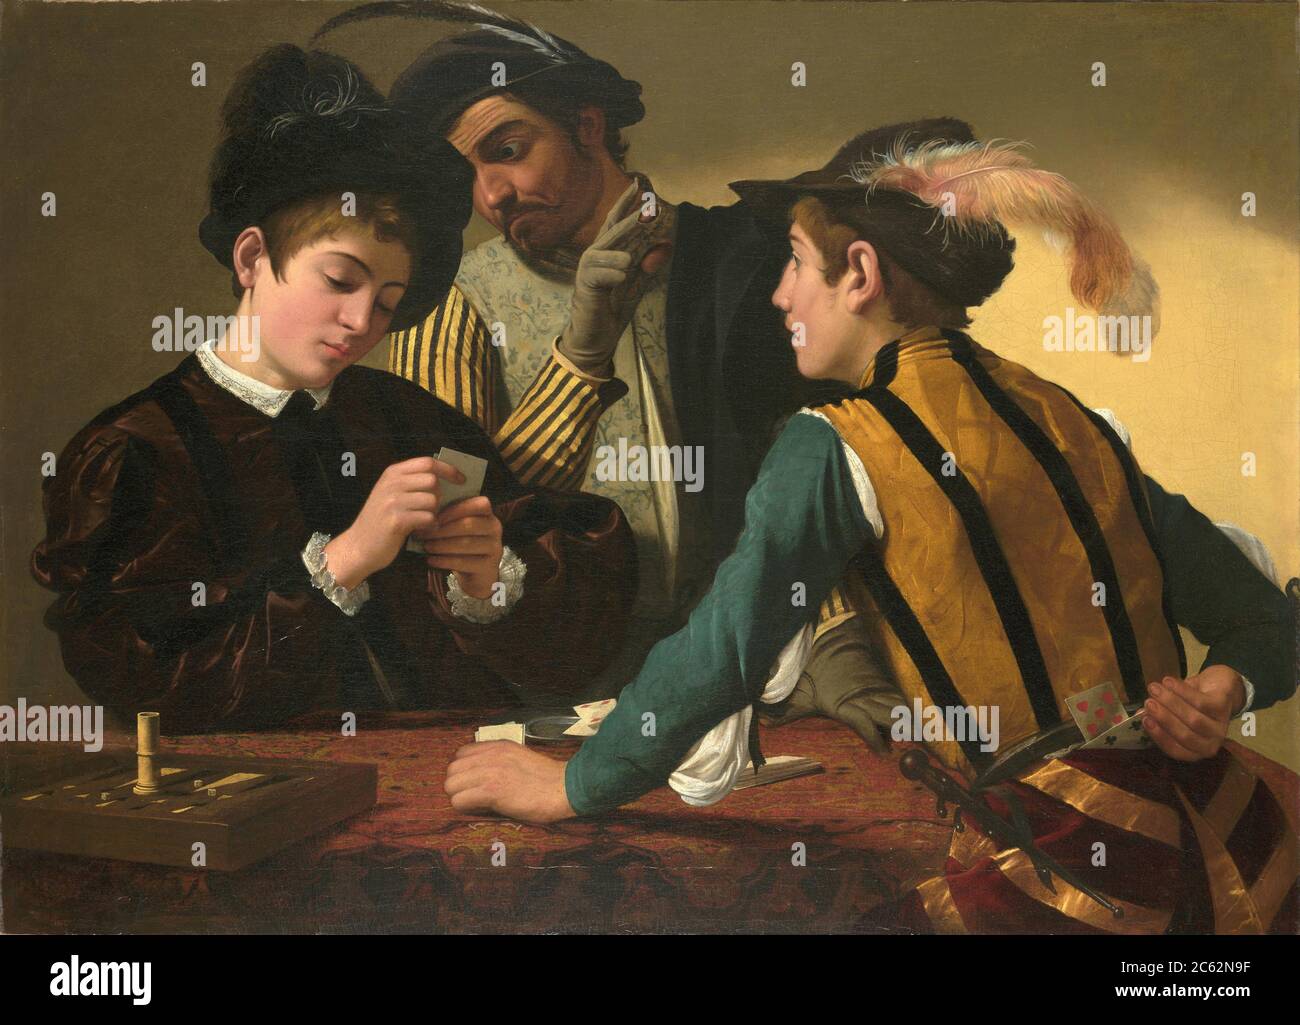 Ölgemälde von berühmten alten Meister Maler Caravaggio. Stockfoto